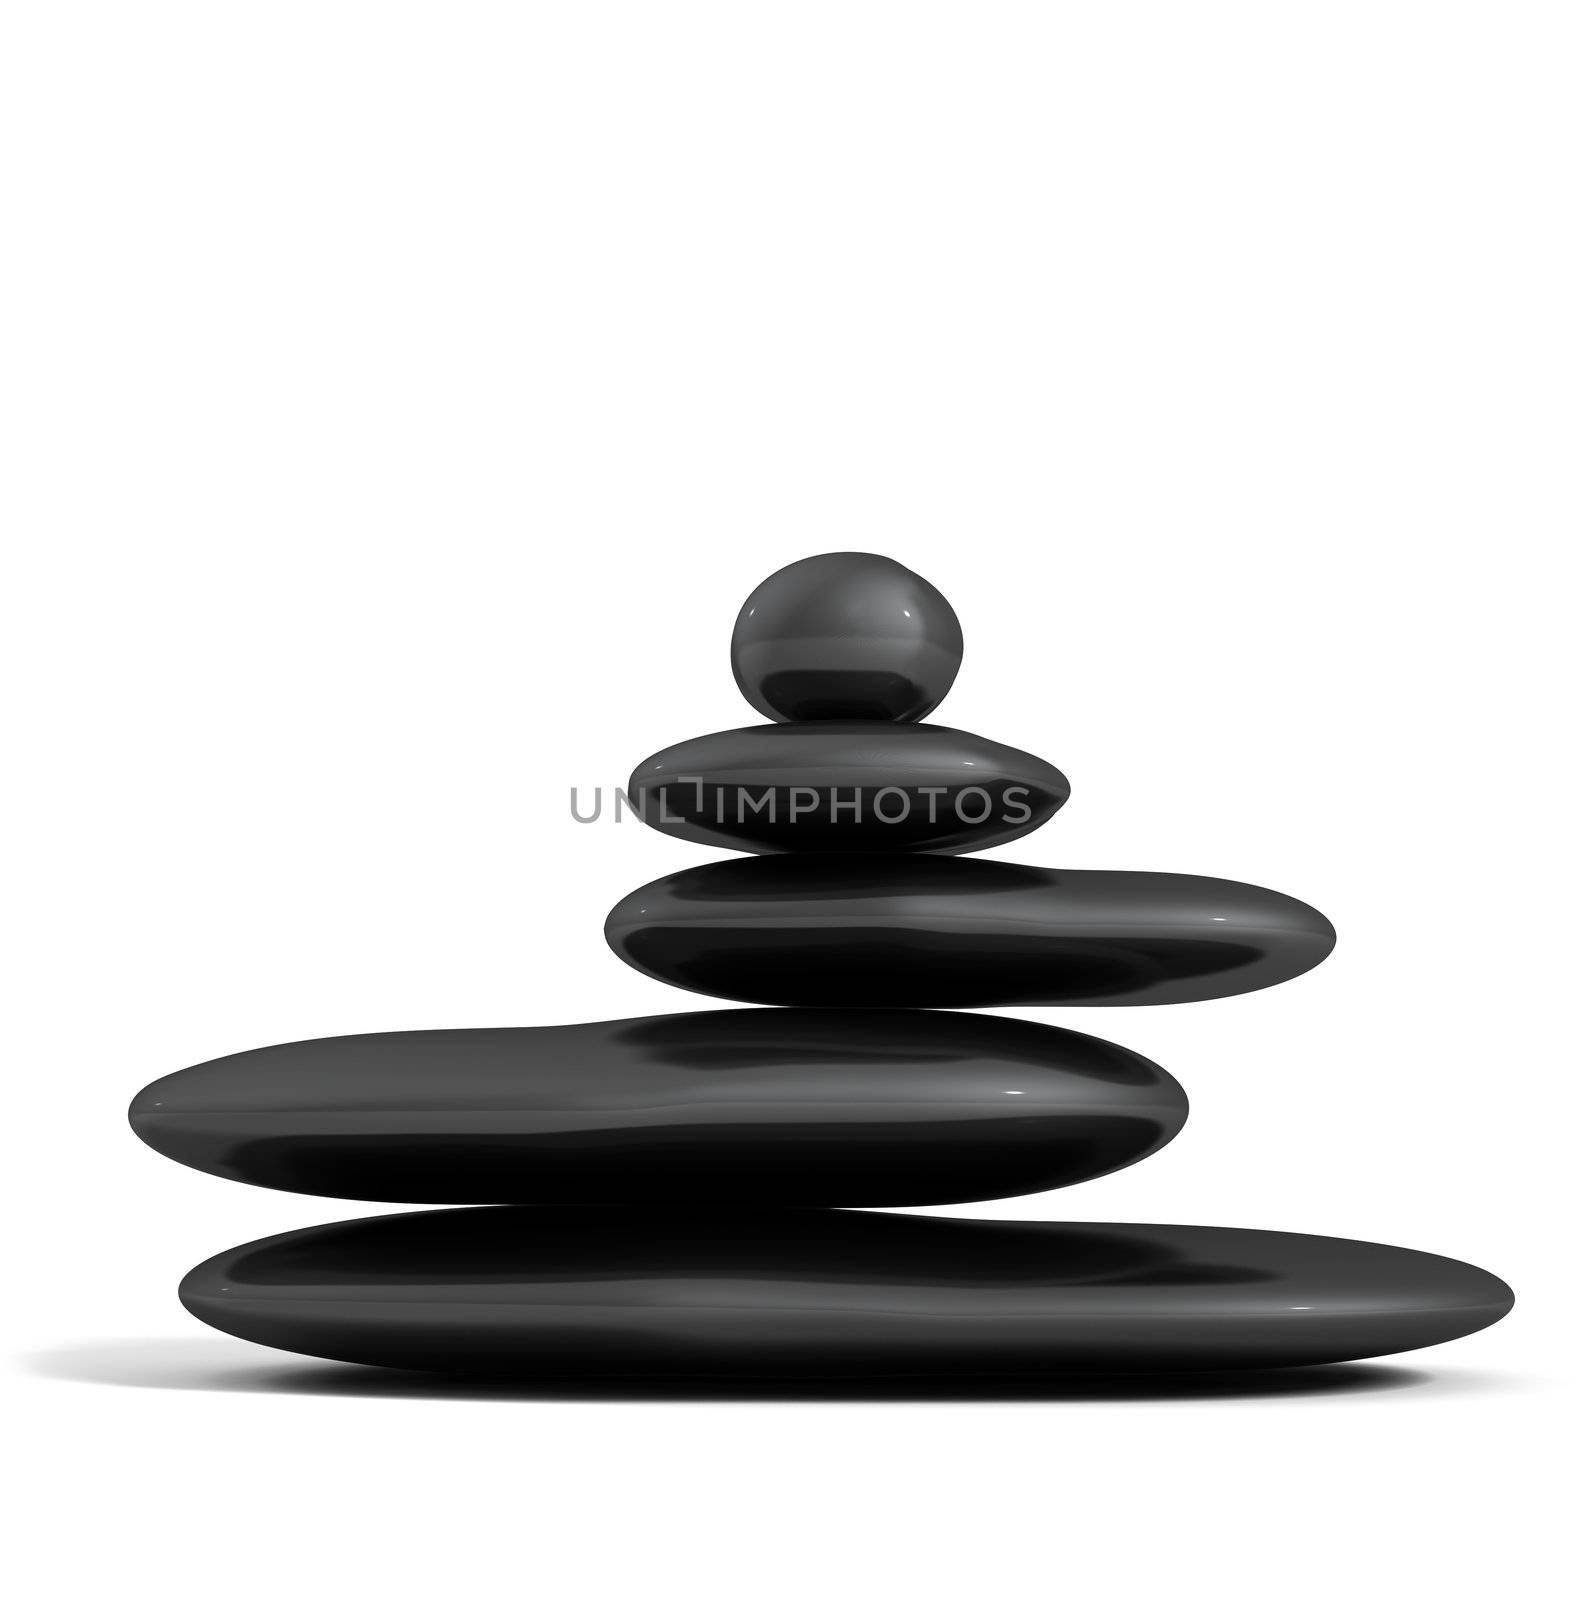 Zen concept by carloscastilla